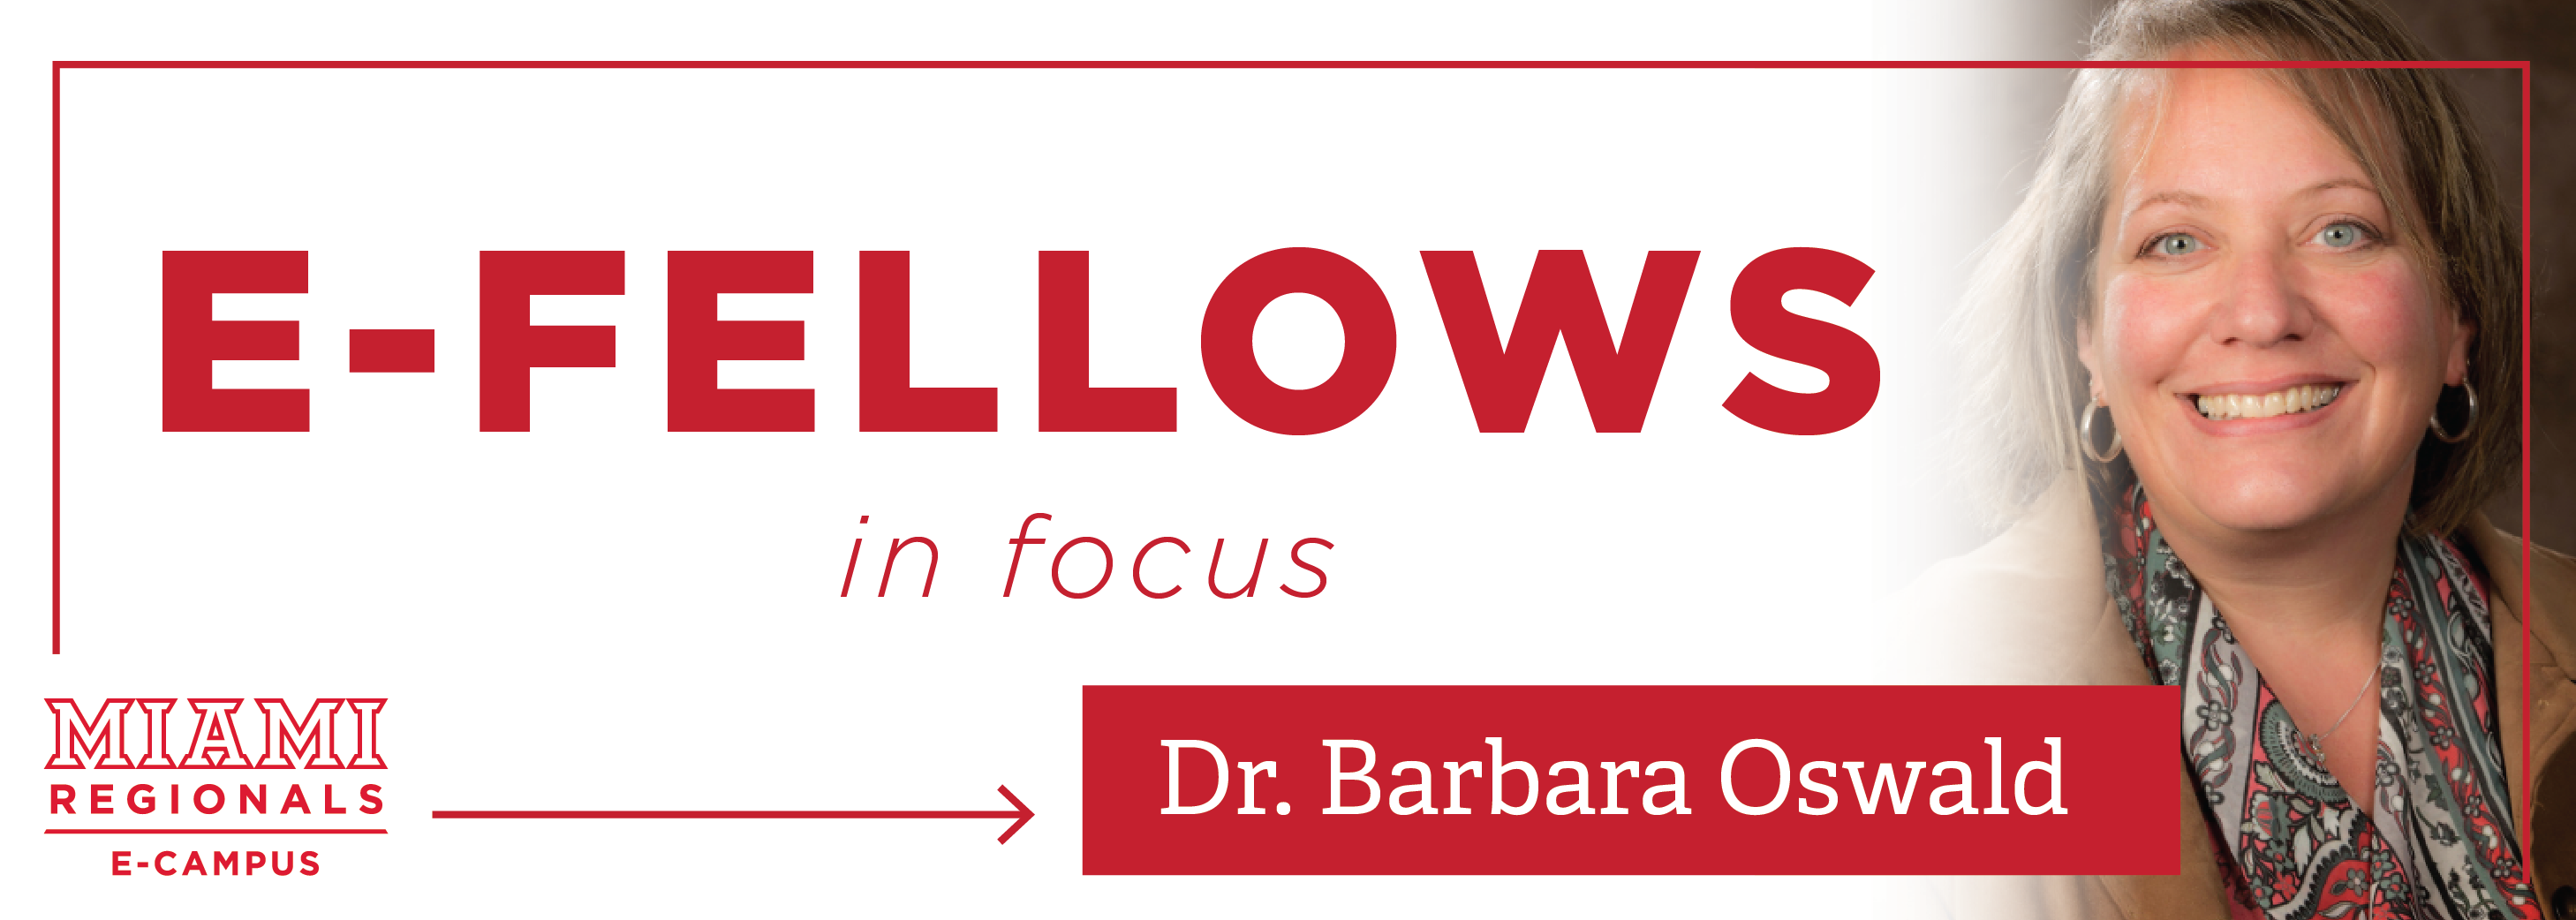 E-Fellows in Focus: Dr. Barbara Oswald Miami Regionals E-Campus